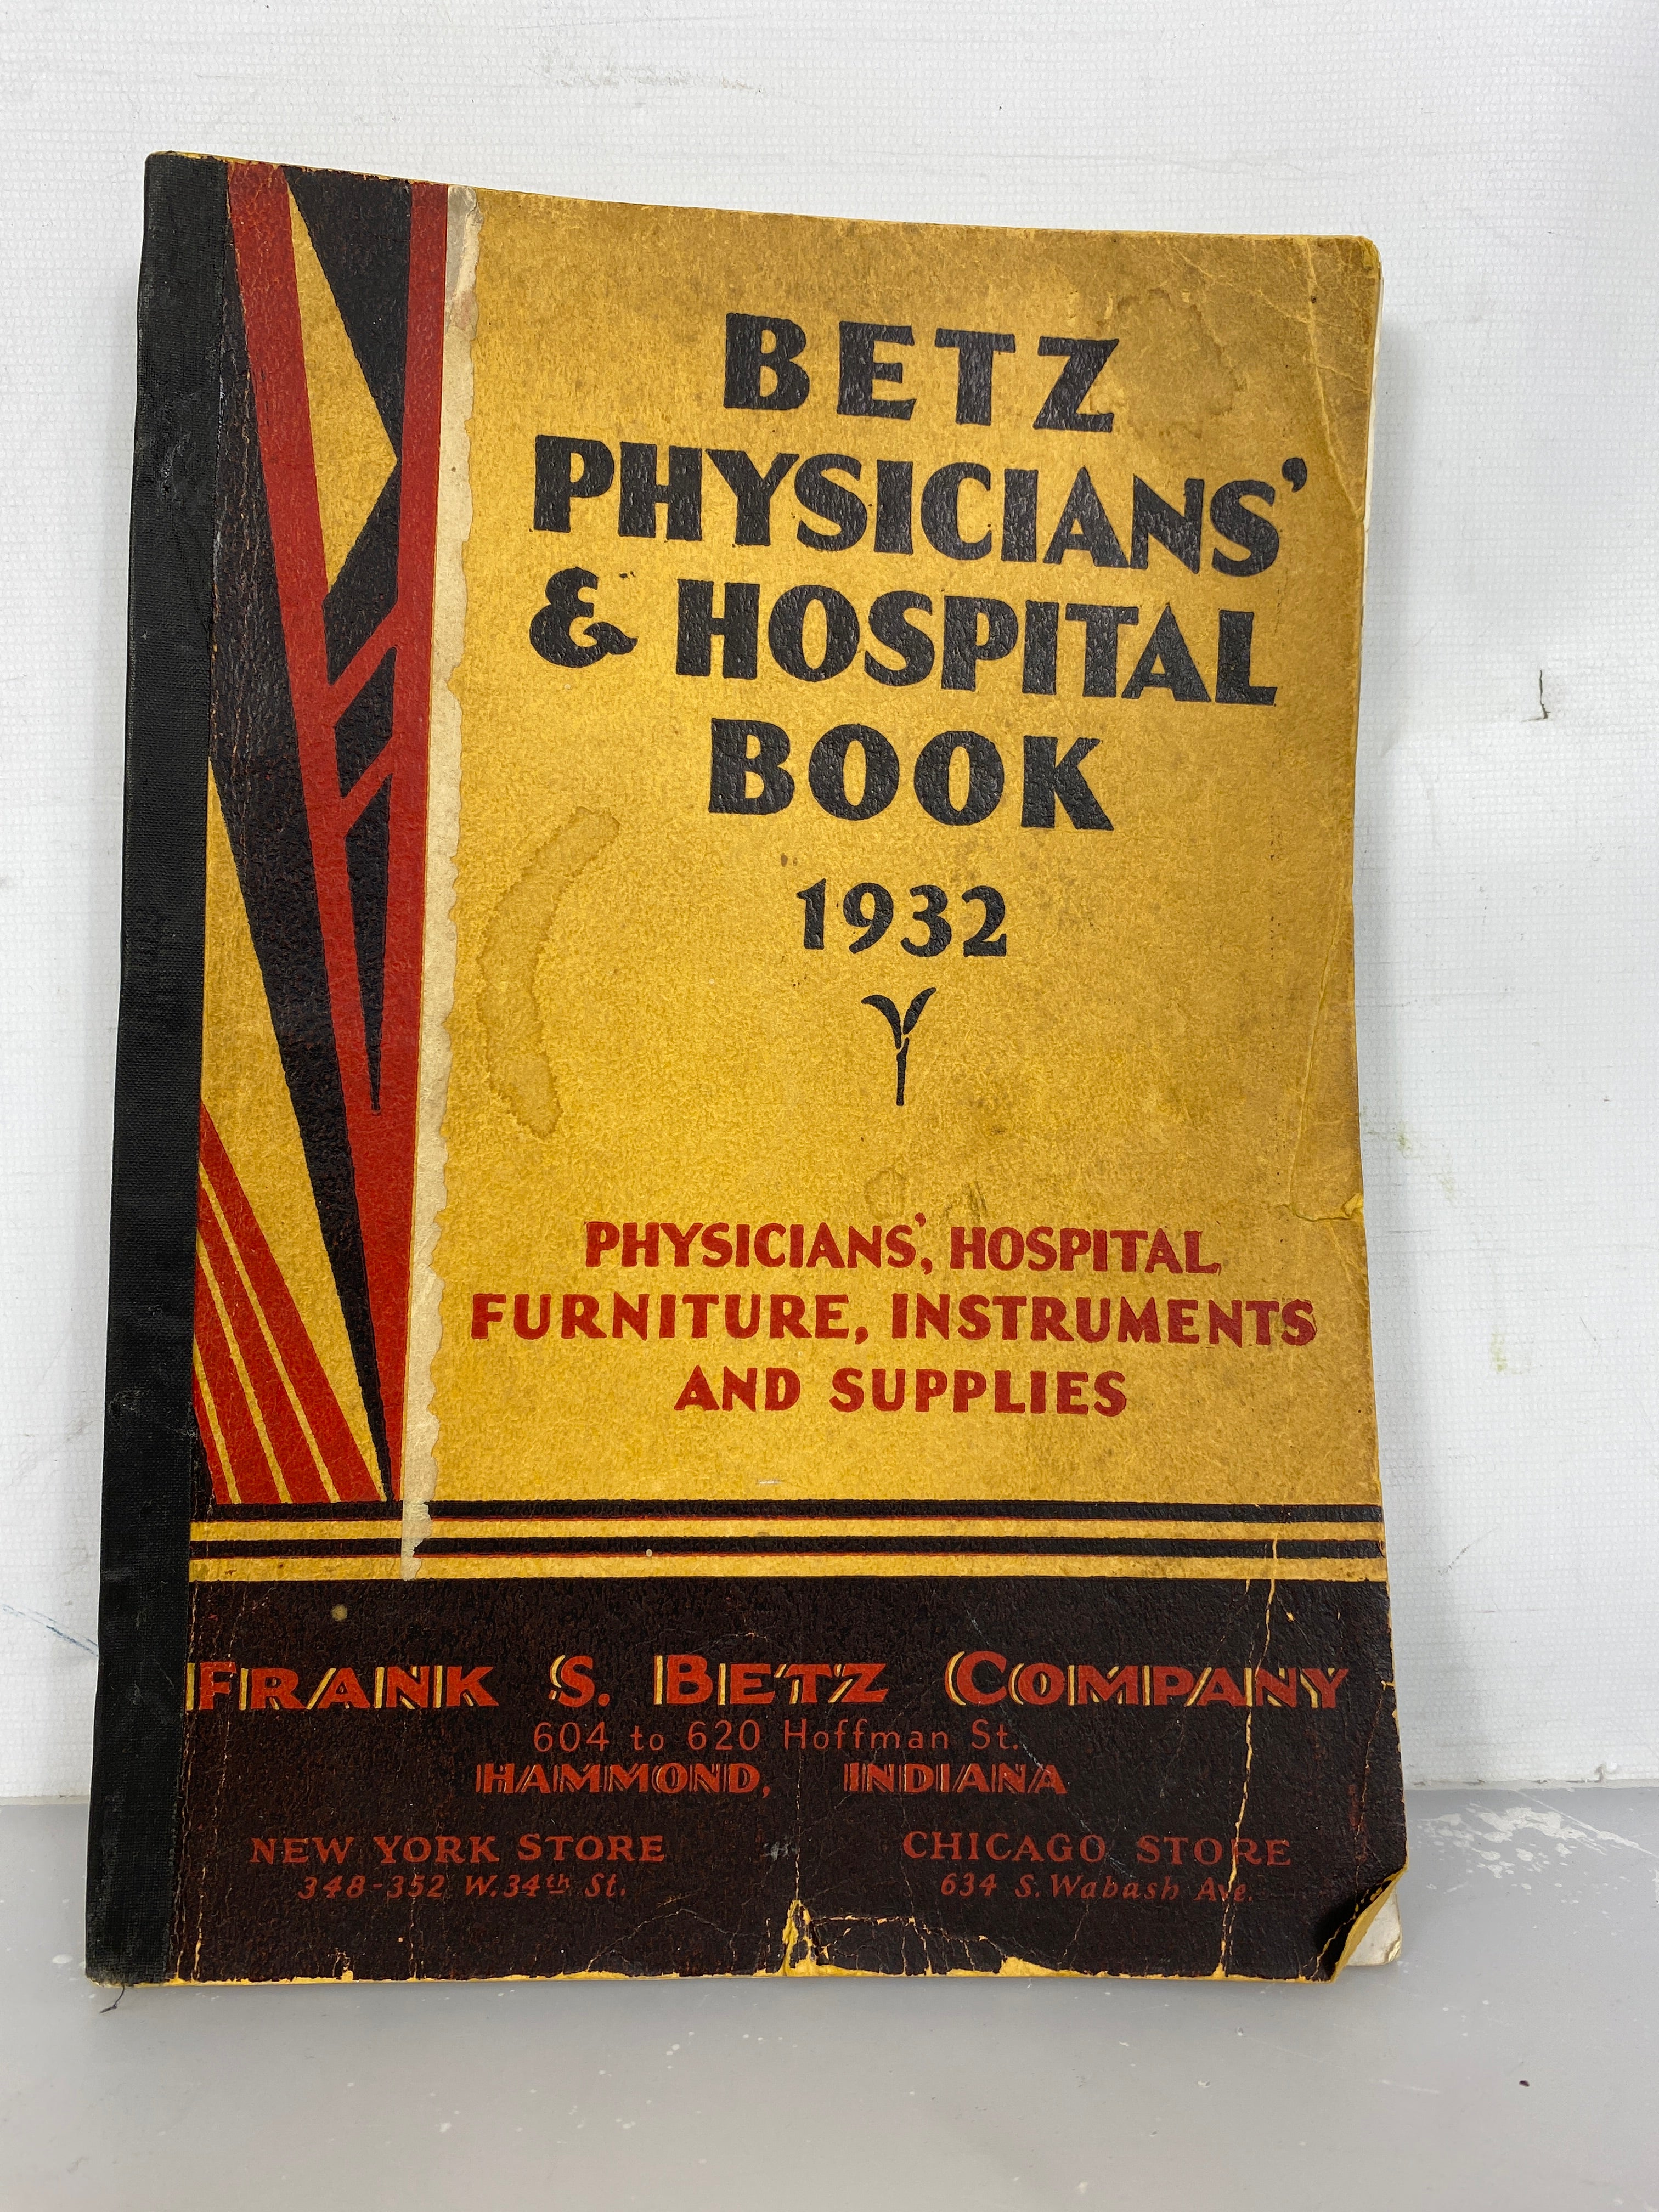 Betz Physicians' & Hospital Book 1932 SC